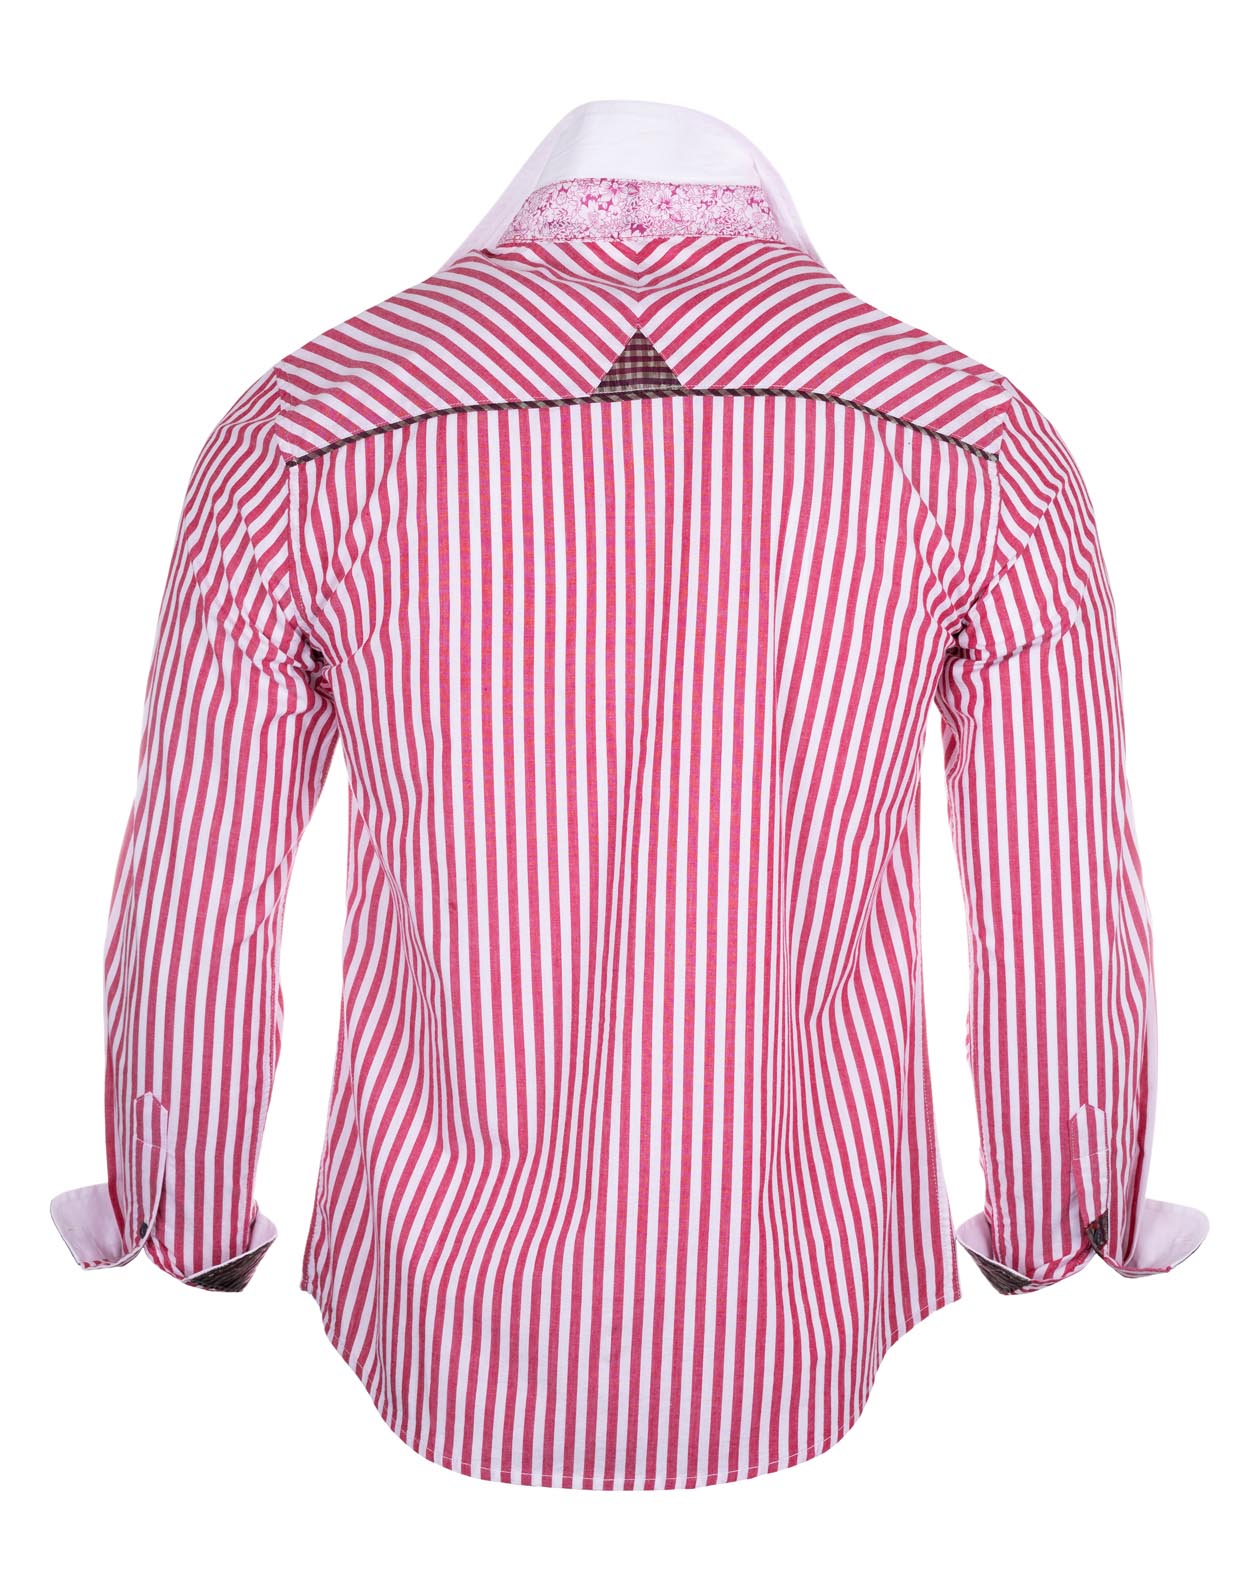 Men's LS Button up Fashion Shirt | Strawberry Fields Rock Roll n Soul